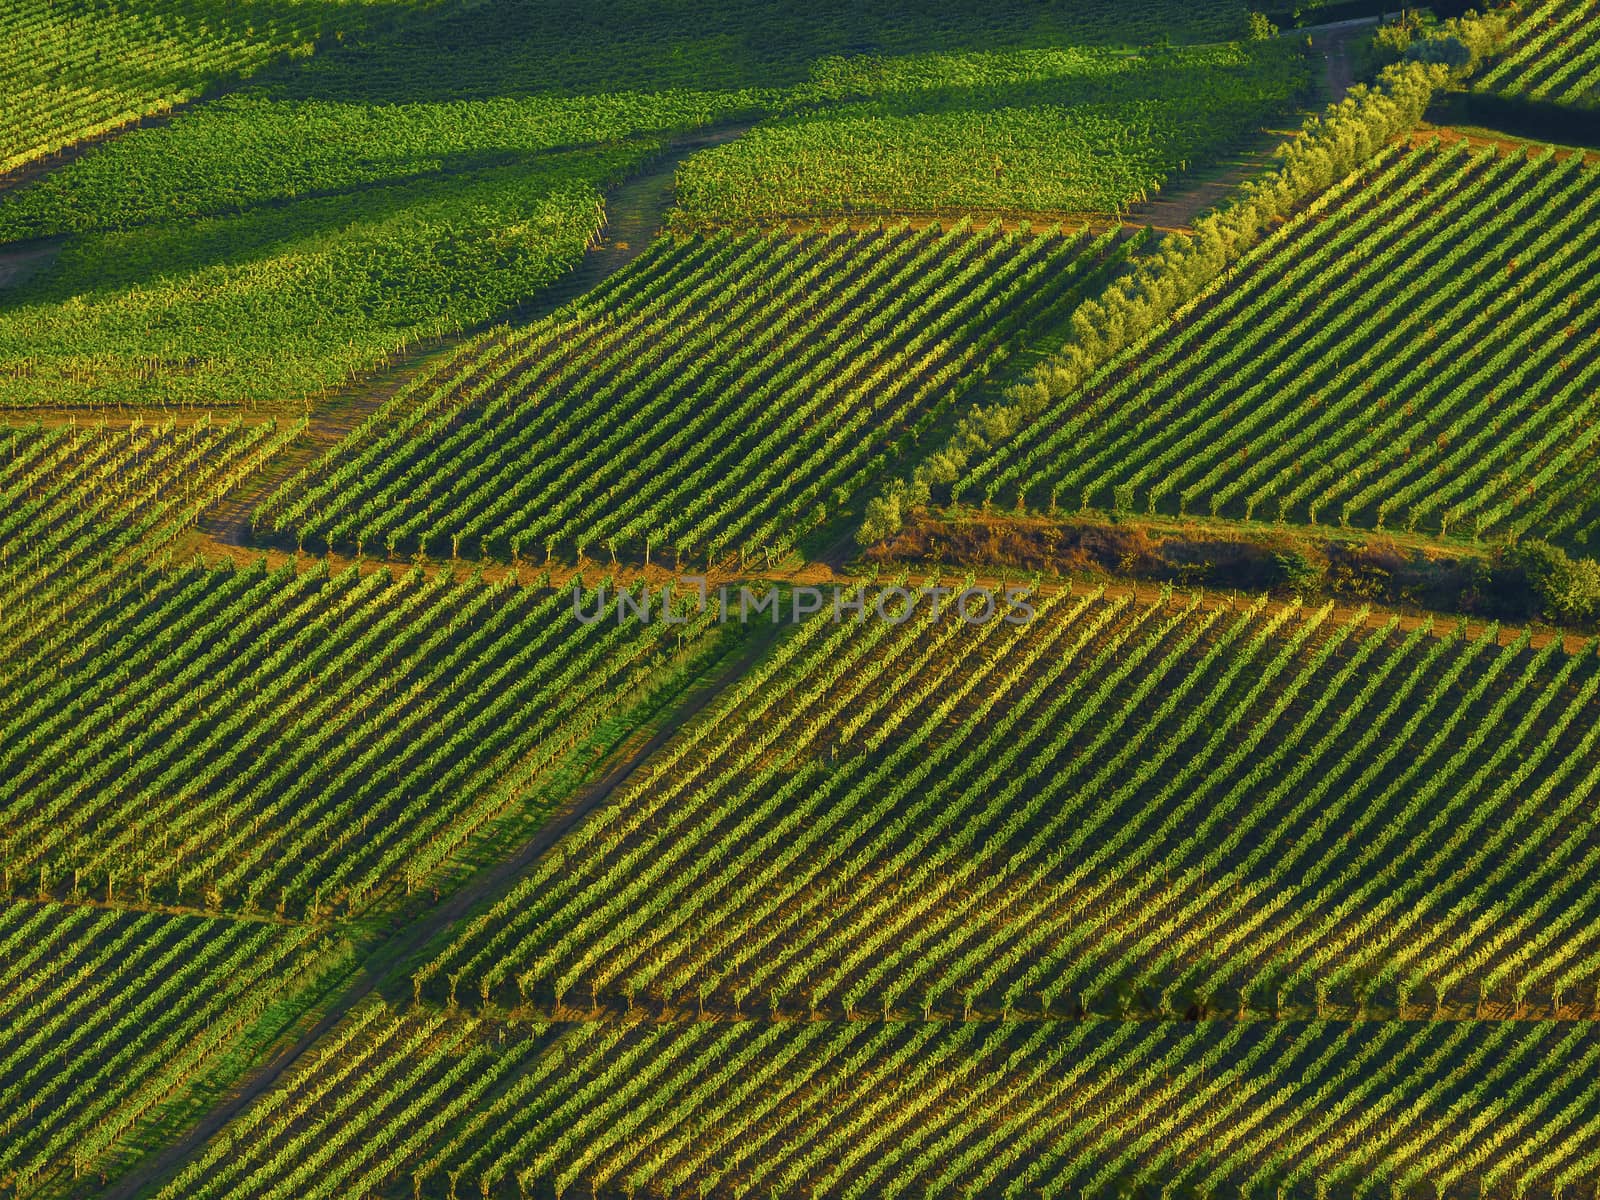 vineyards in the fall taken in the Chianti region of Italy